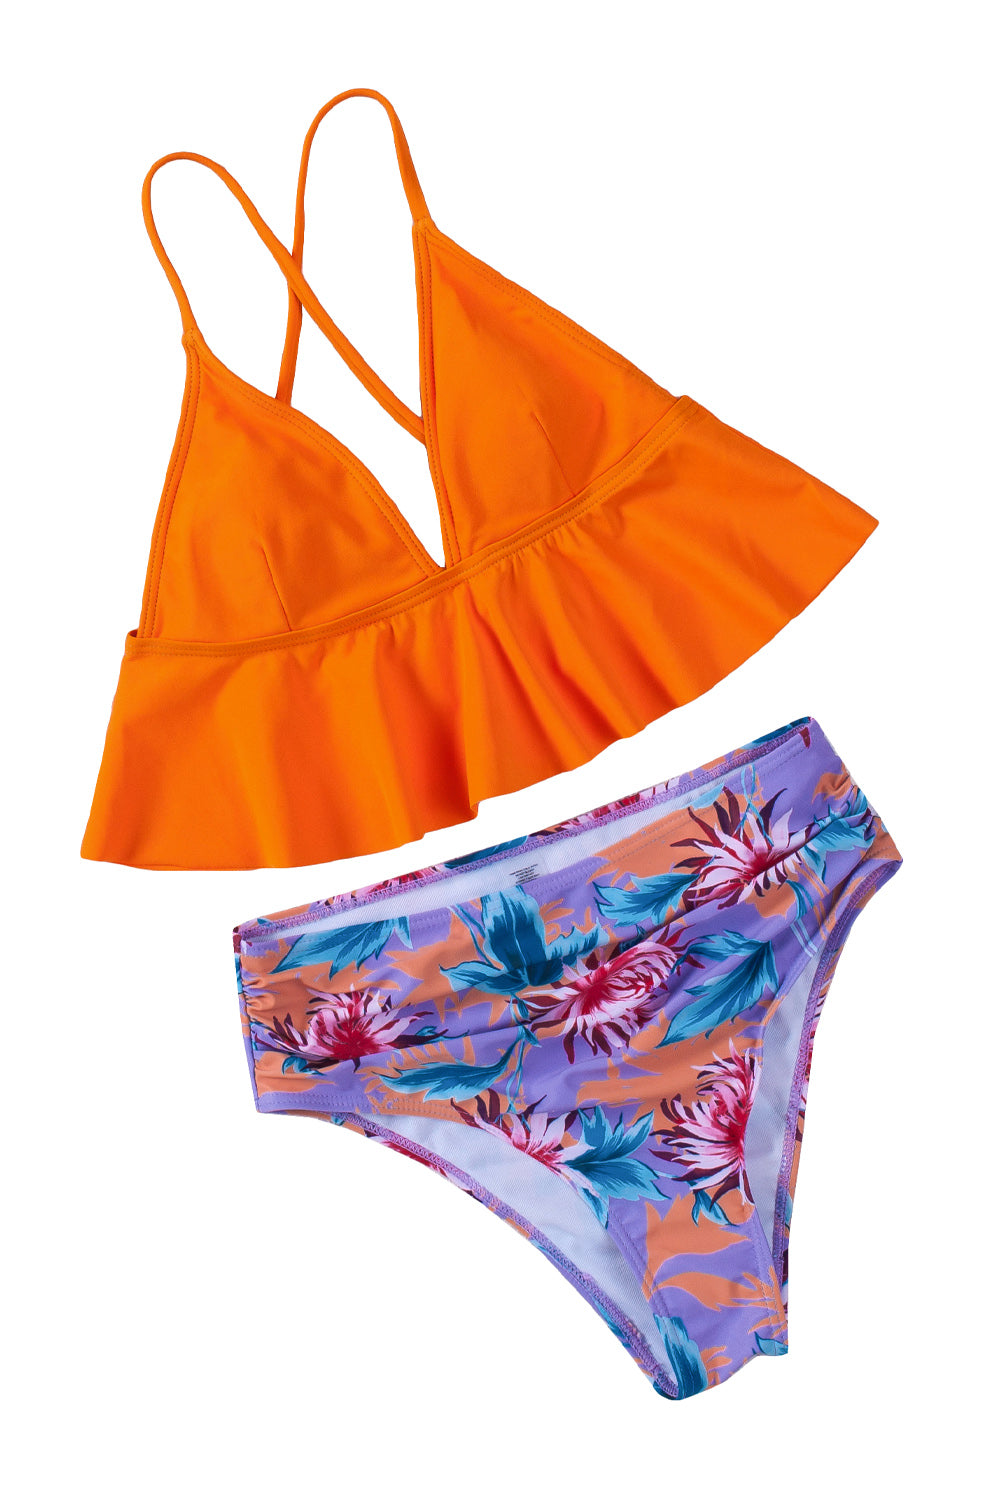 Floral Print Ruffled Criss Cross Spaghetti Strap Bikini Swimsuit